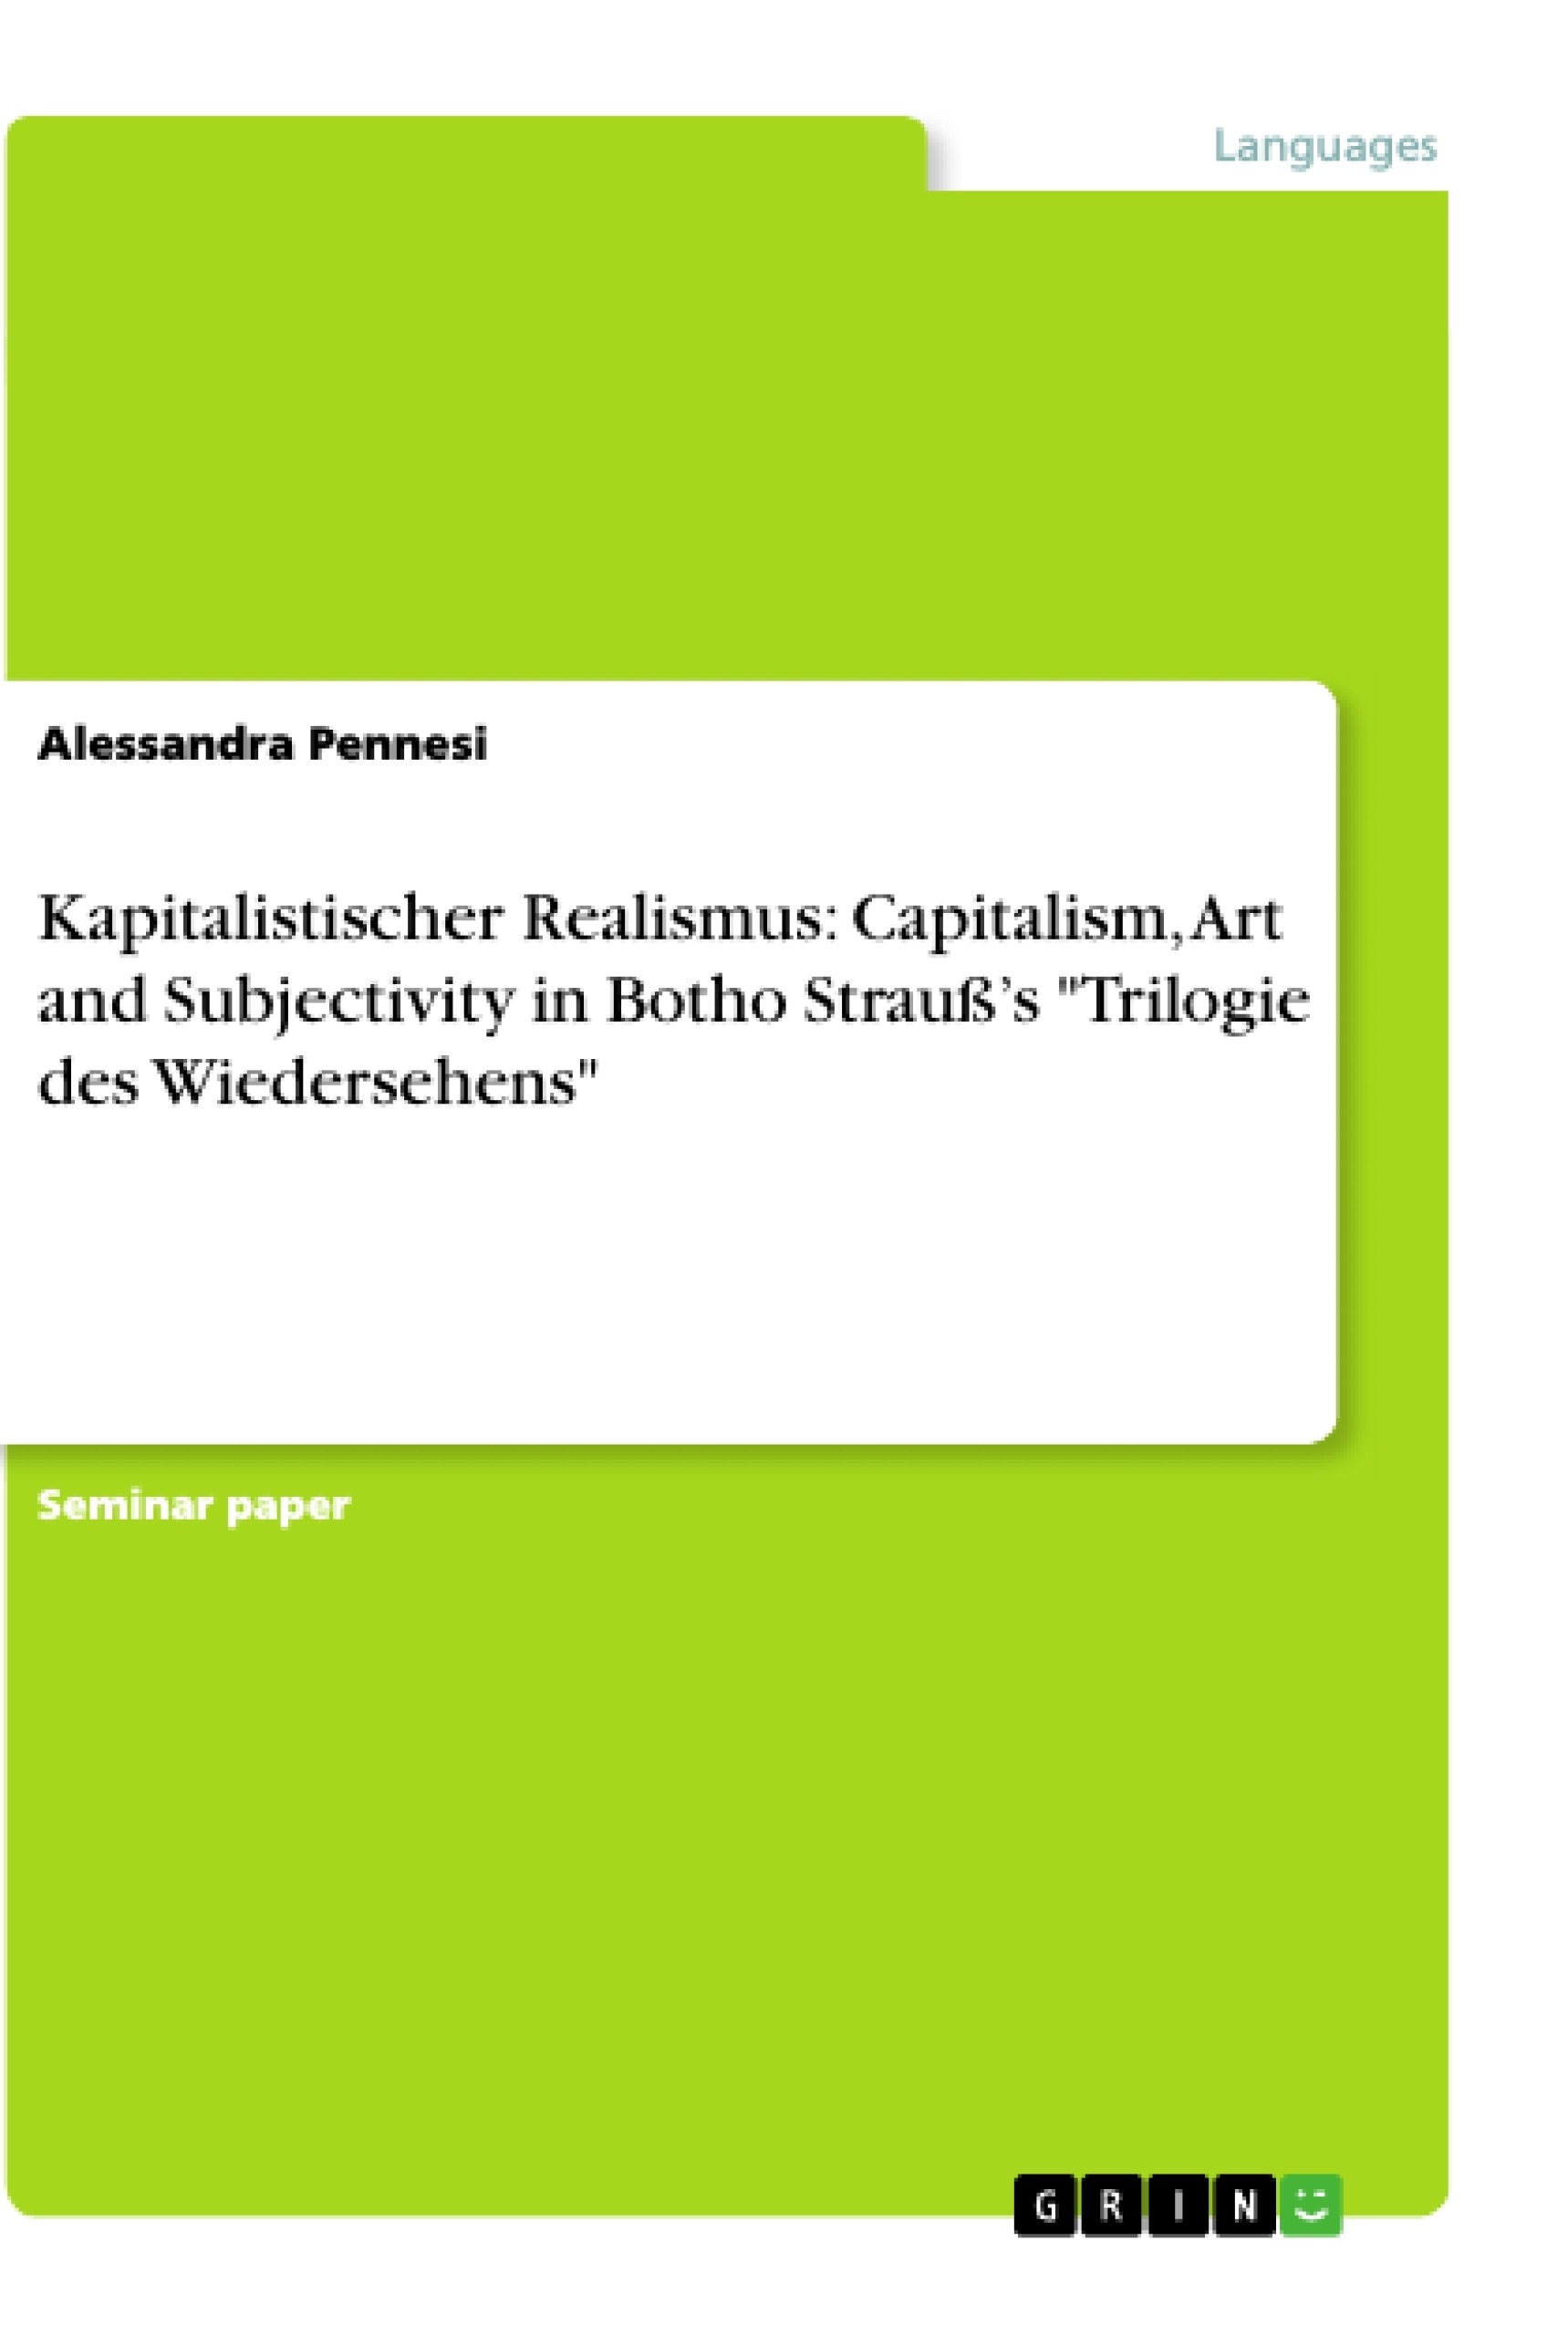 Title: Kapitalistischer Realismus: Capitalism, Art and Subjectivity in Botho Strauß’s "Trilogie des Wiedersehens"